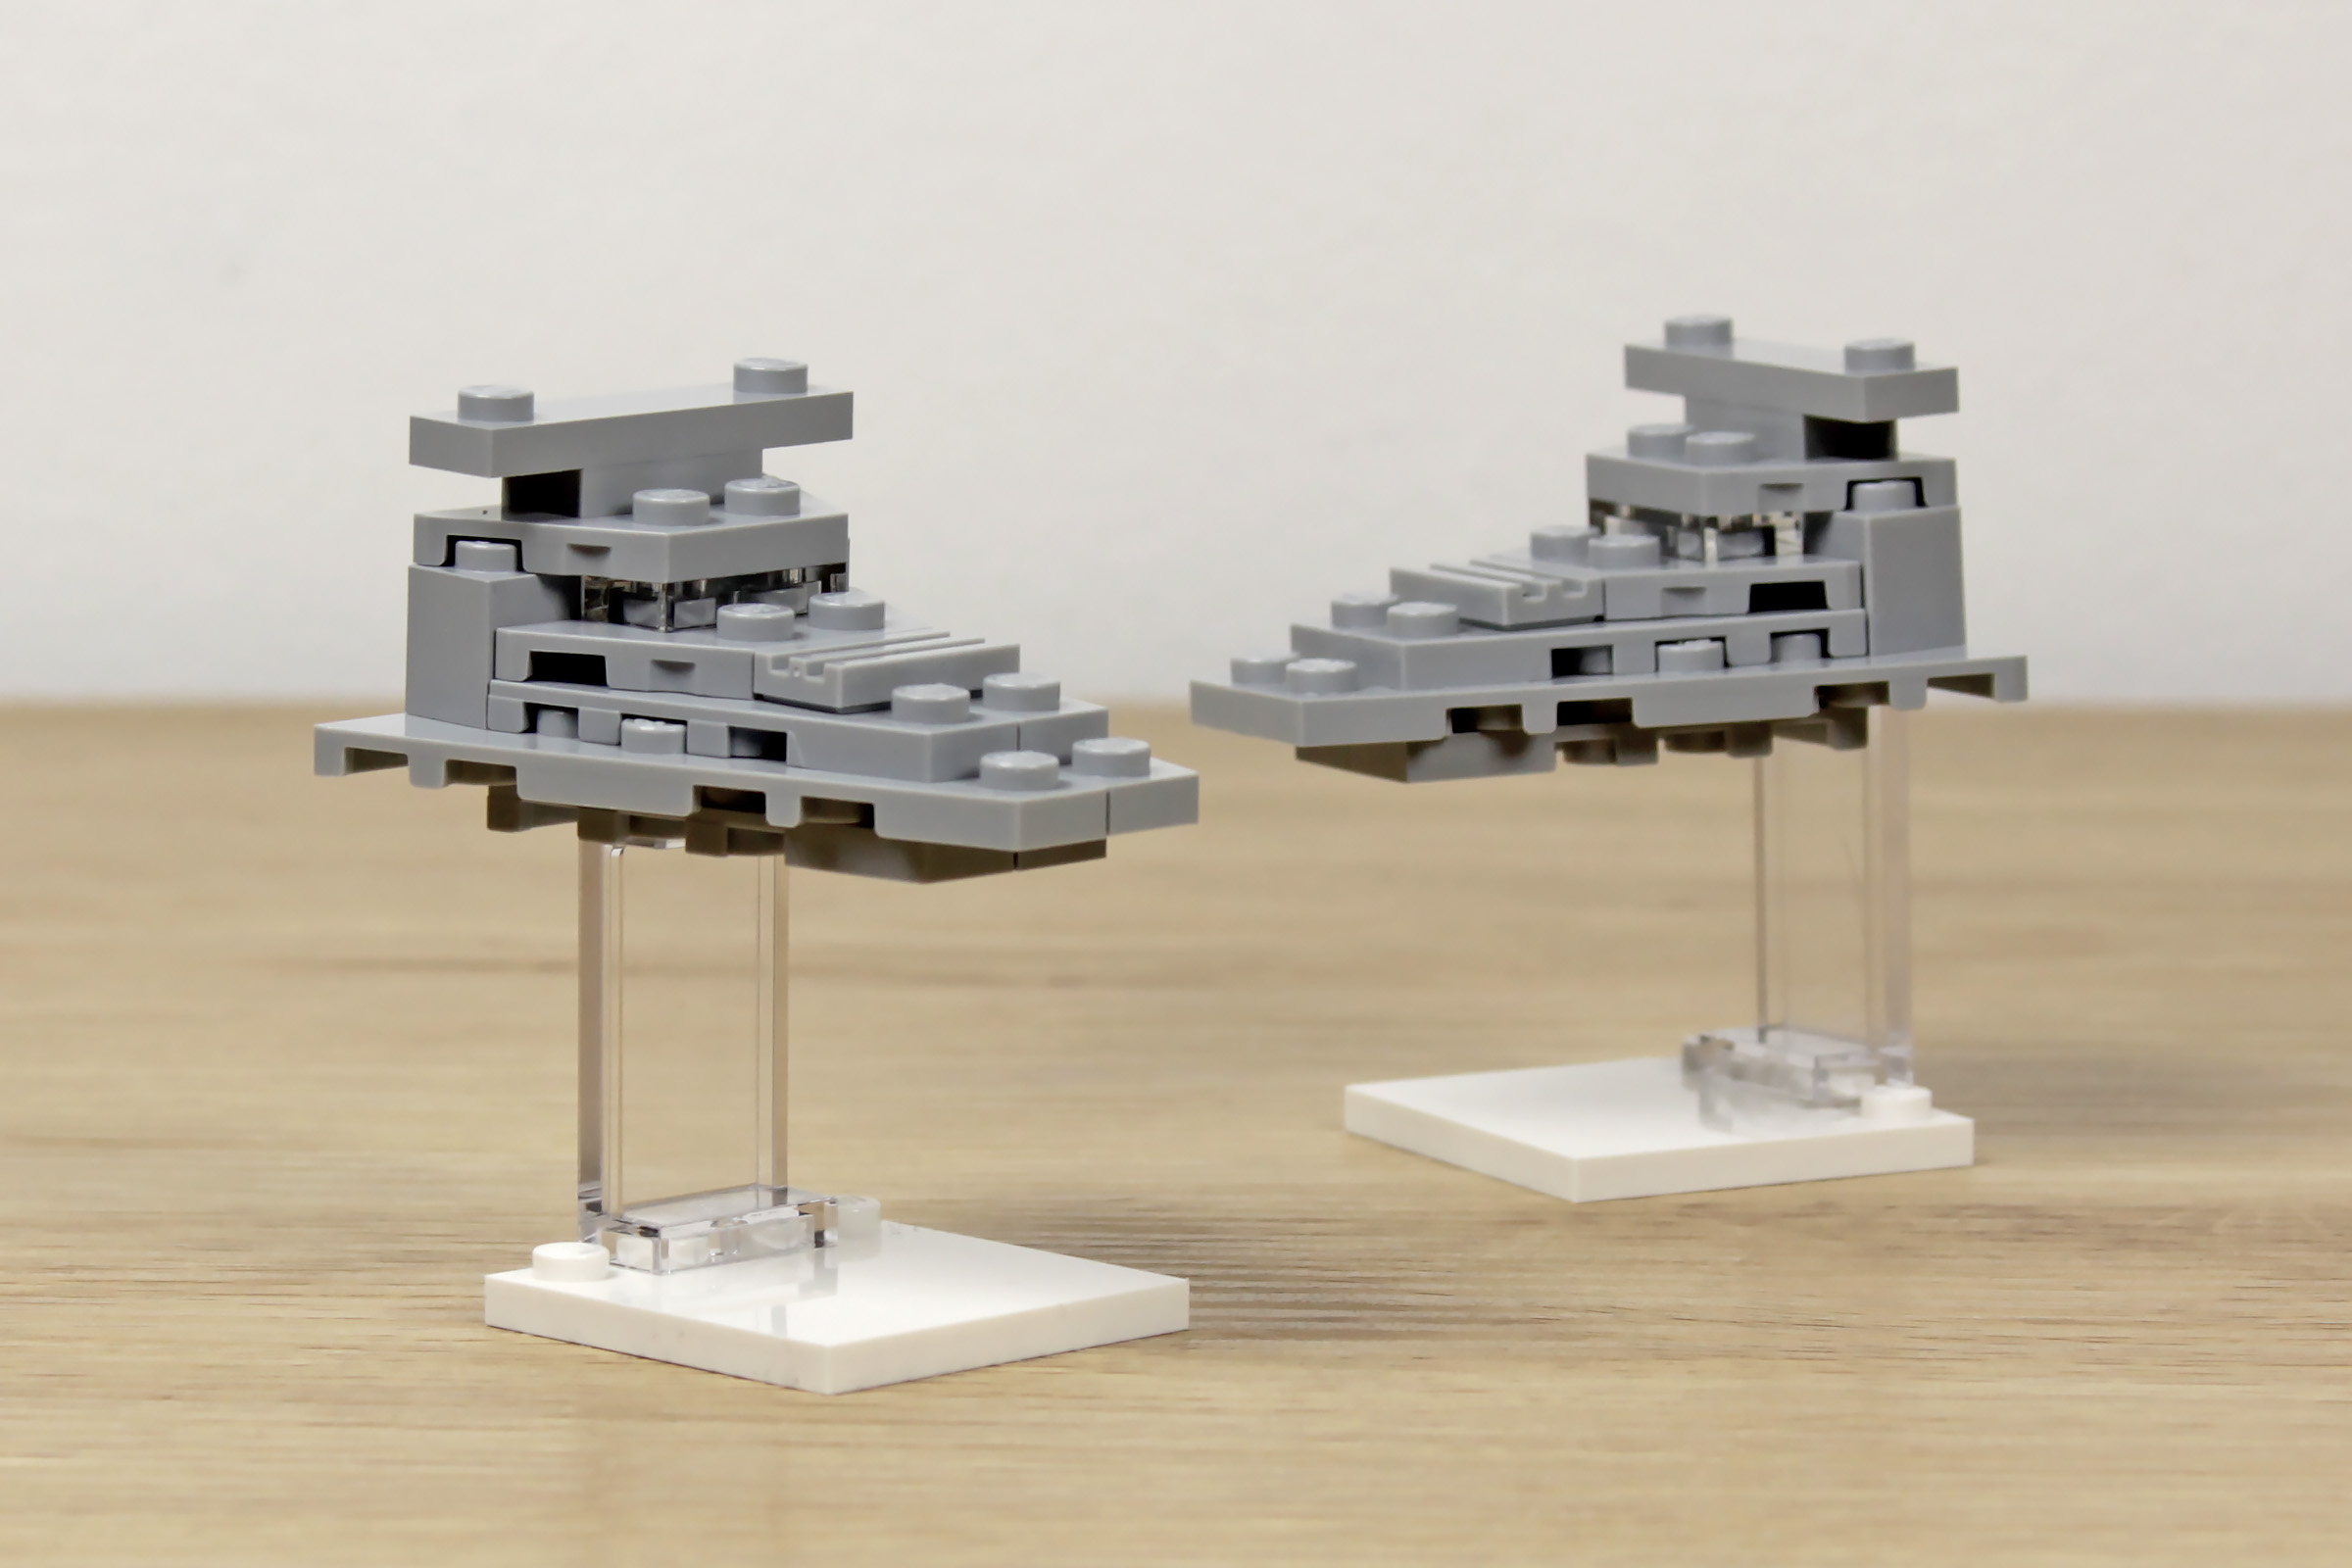 LEGO Star Wars Star Destroyer mini-vehicles